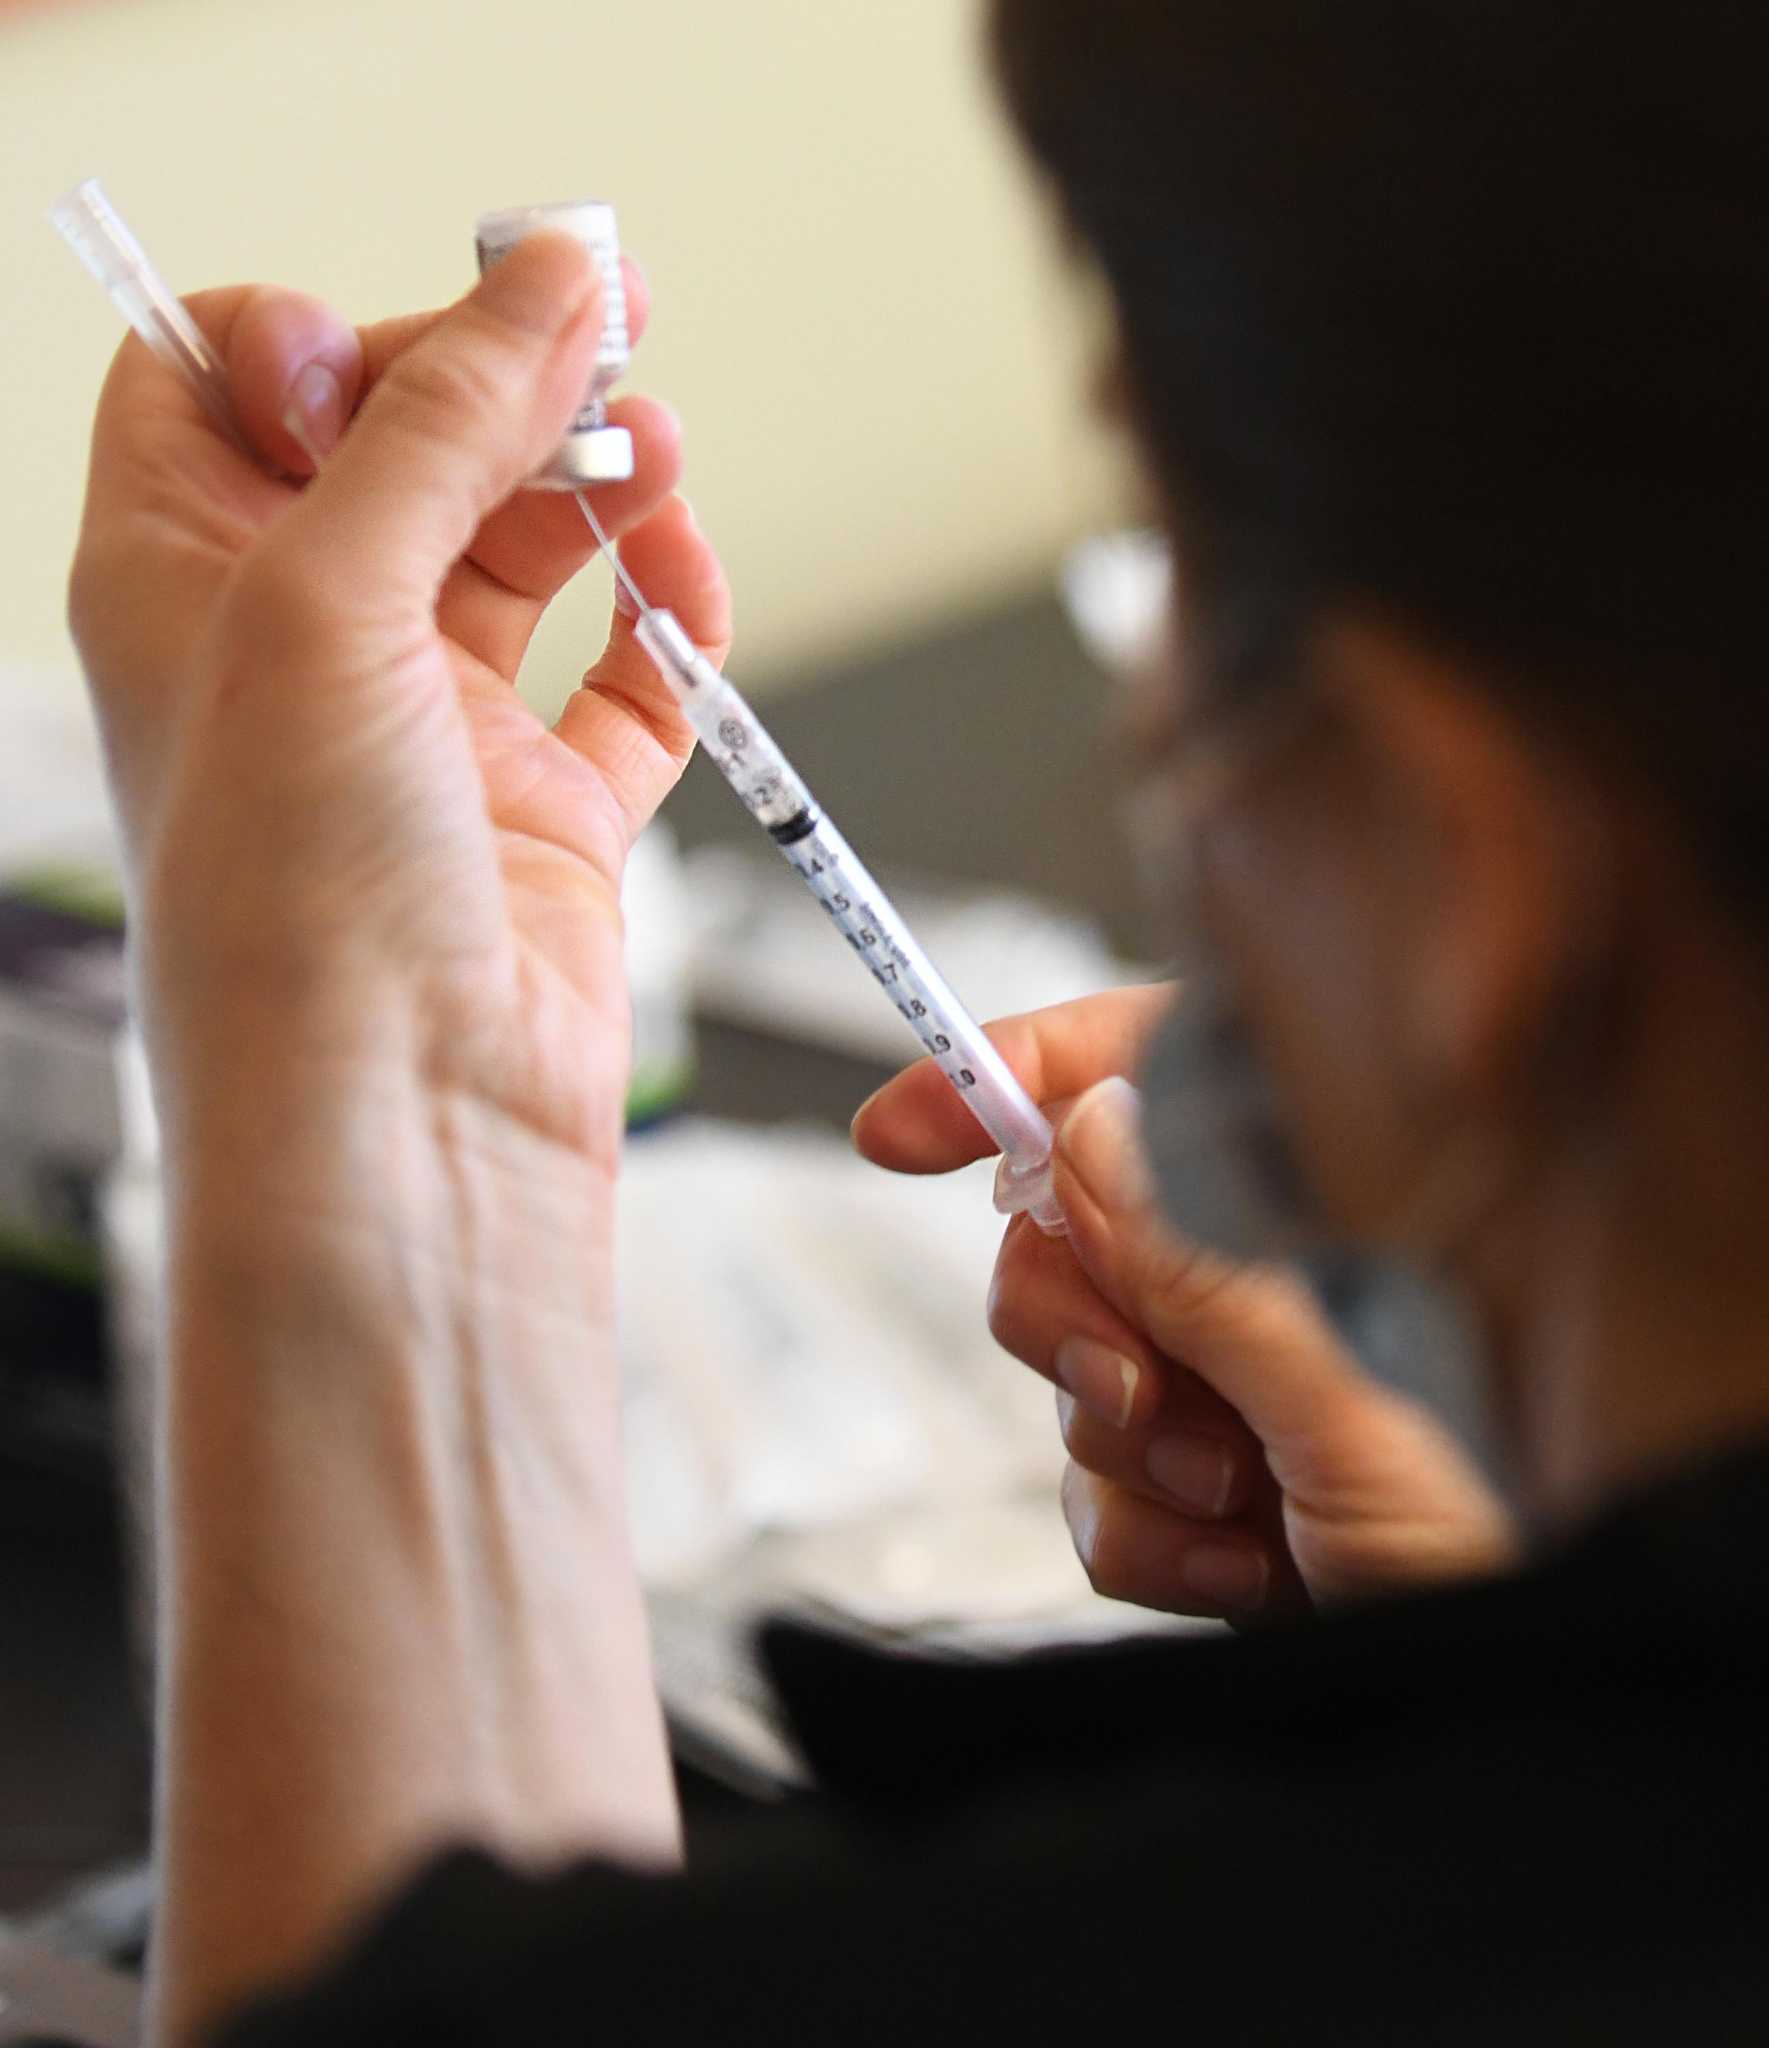 Local COVID clinics should not vaccinate the general public